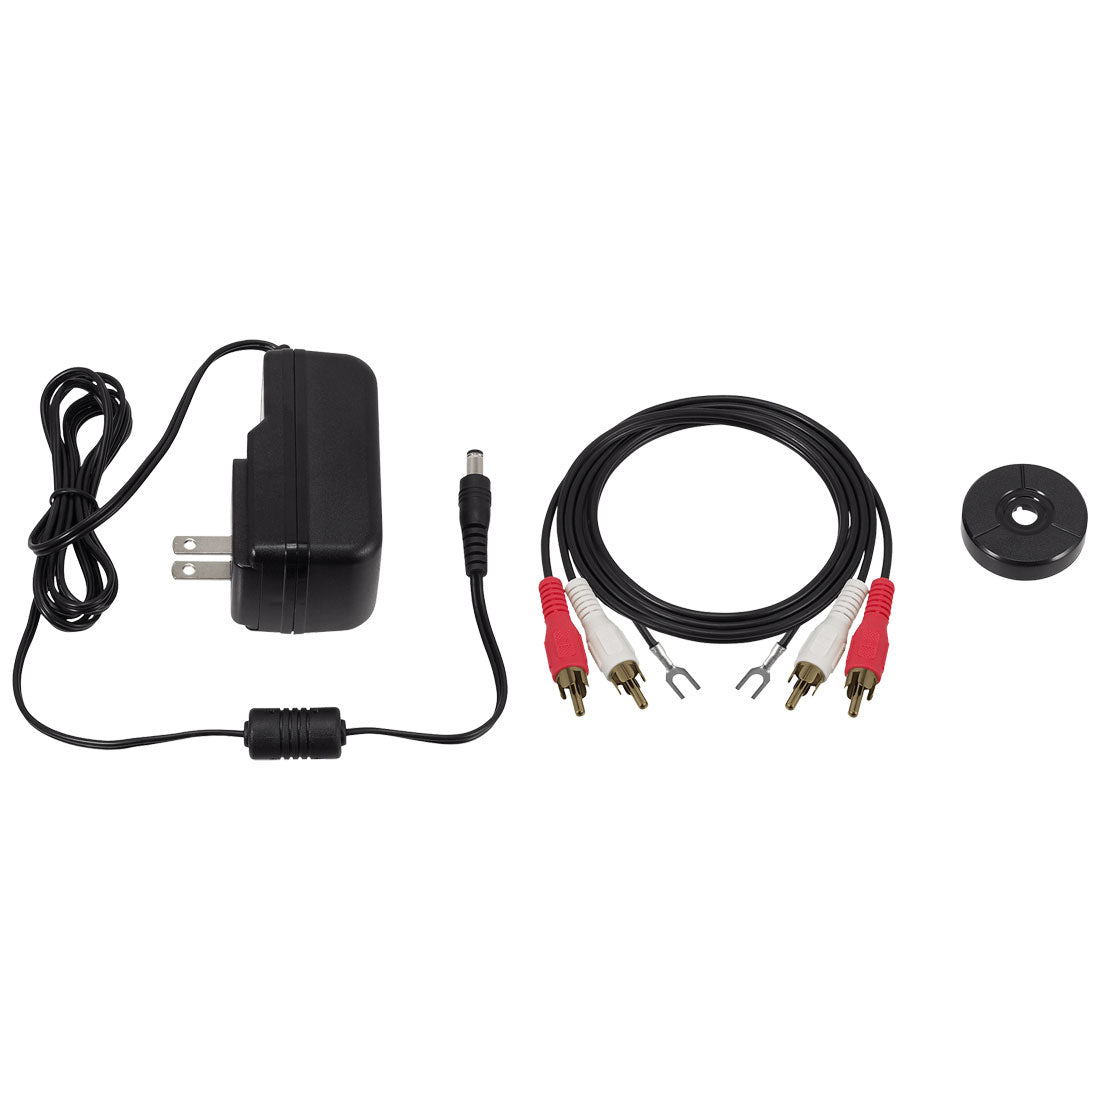 Audio Technica LP120-USB Direct-Drive Professional Turntable Photo #2498756  - Canuck Audio Mart